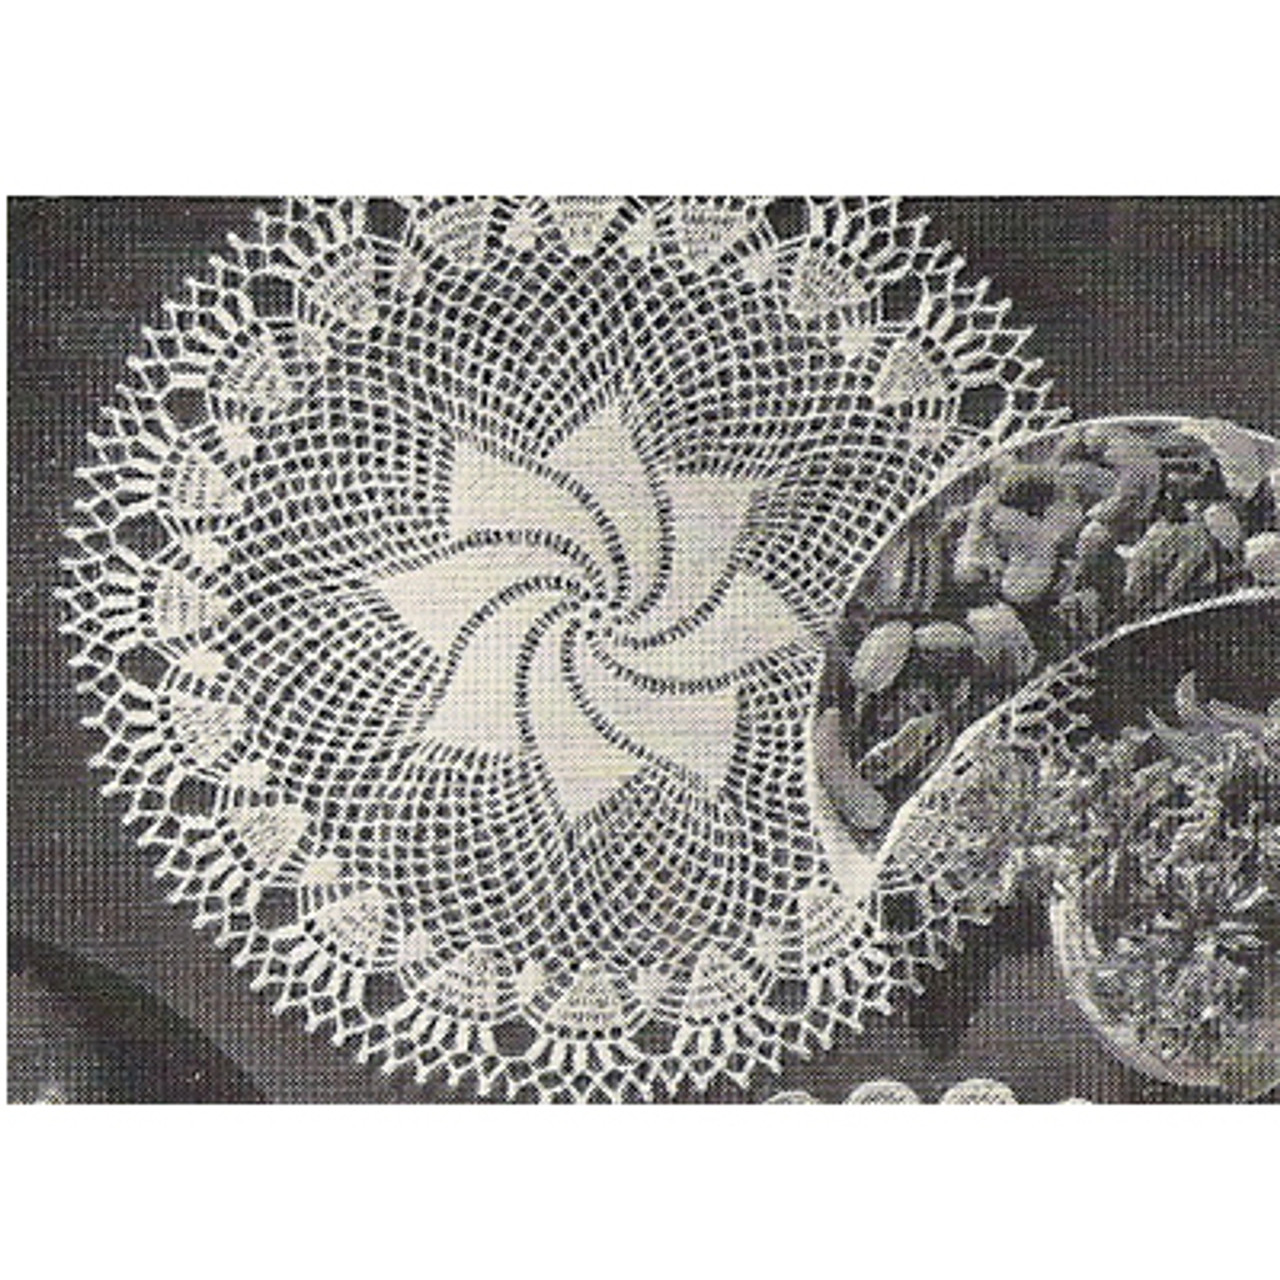 Comets Tail, Crochet Pinwheel Doily Pattern 